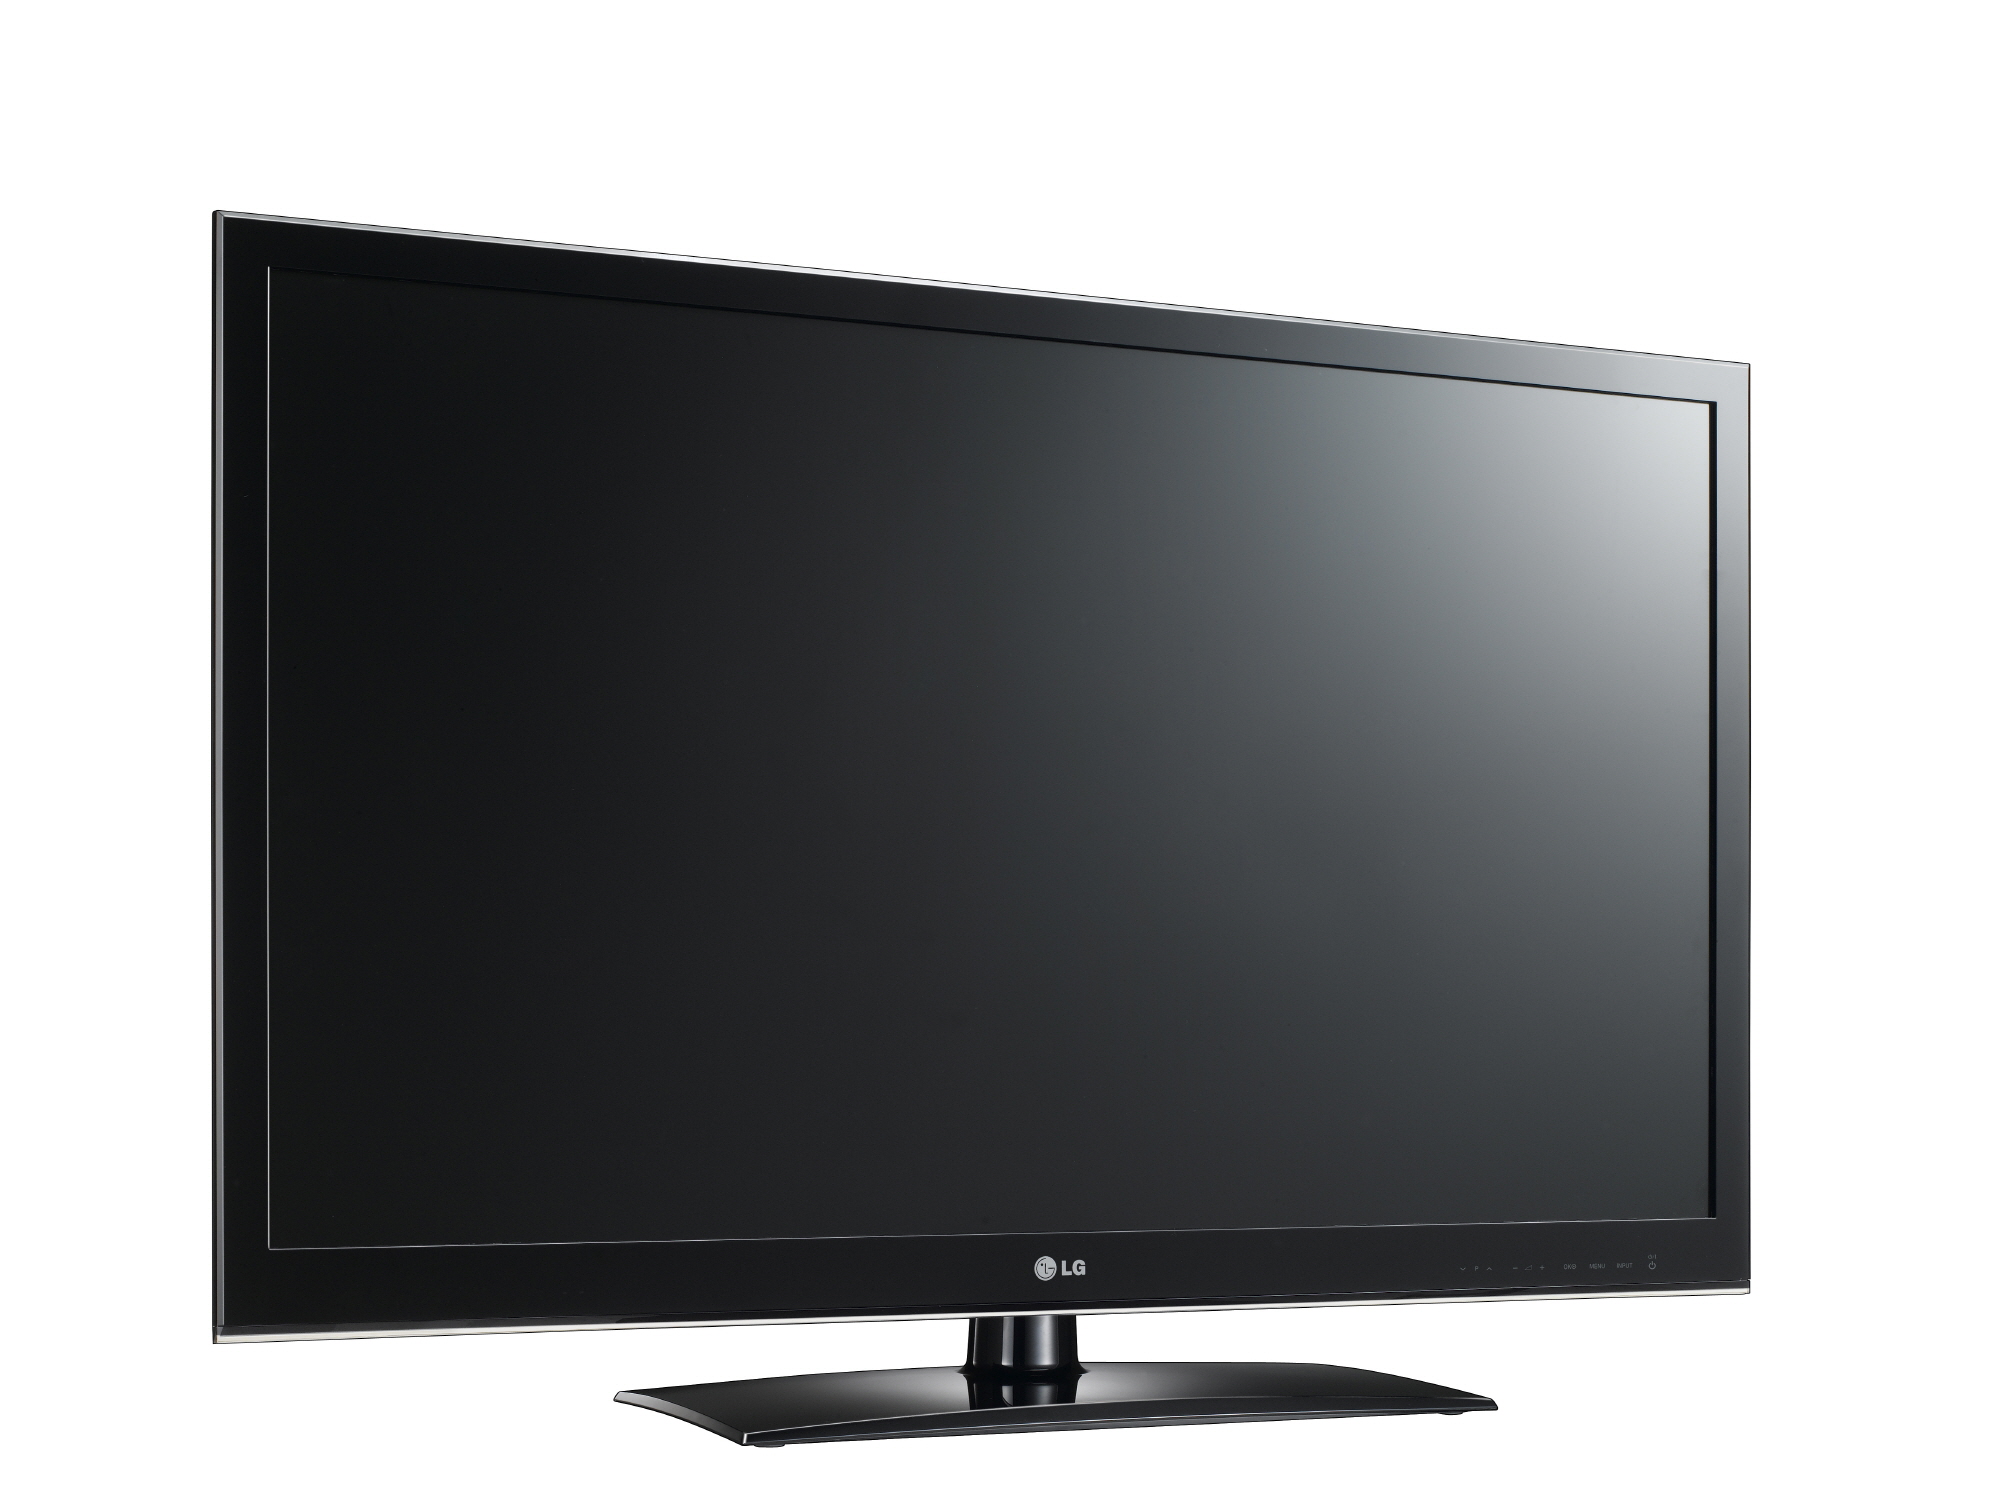 Телевизор lg 32 см. Телевизор LG 32lv3500. LG 42lv4500. Телевизор LG 106см. LG 42ld550.